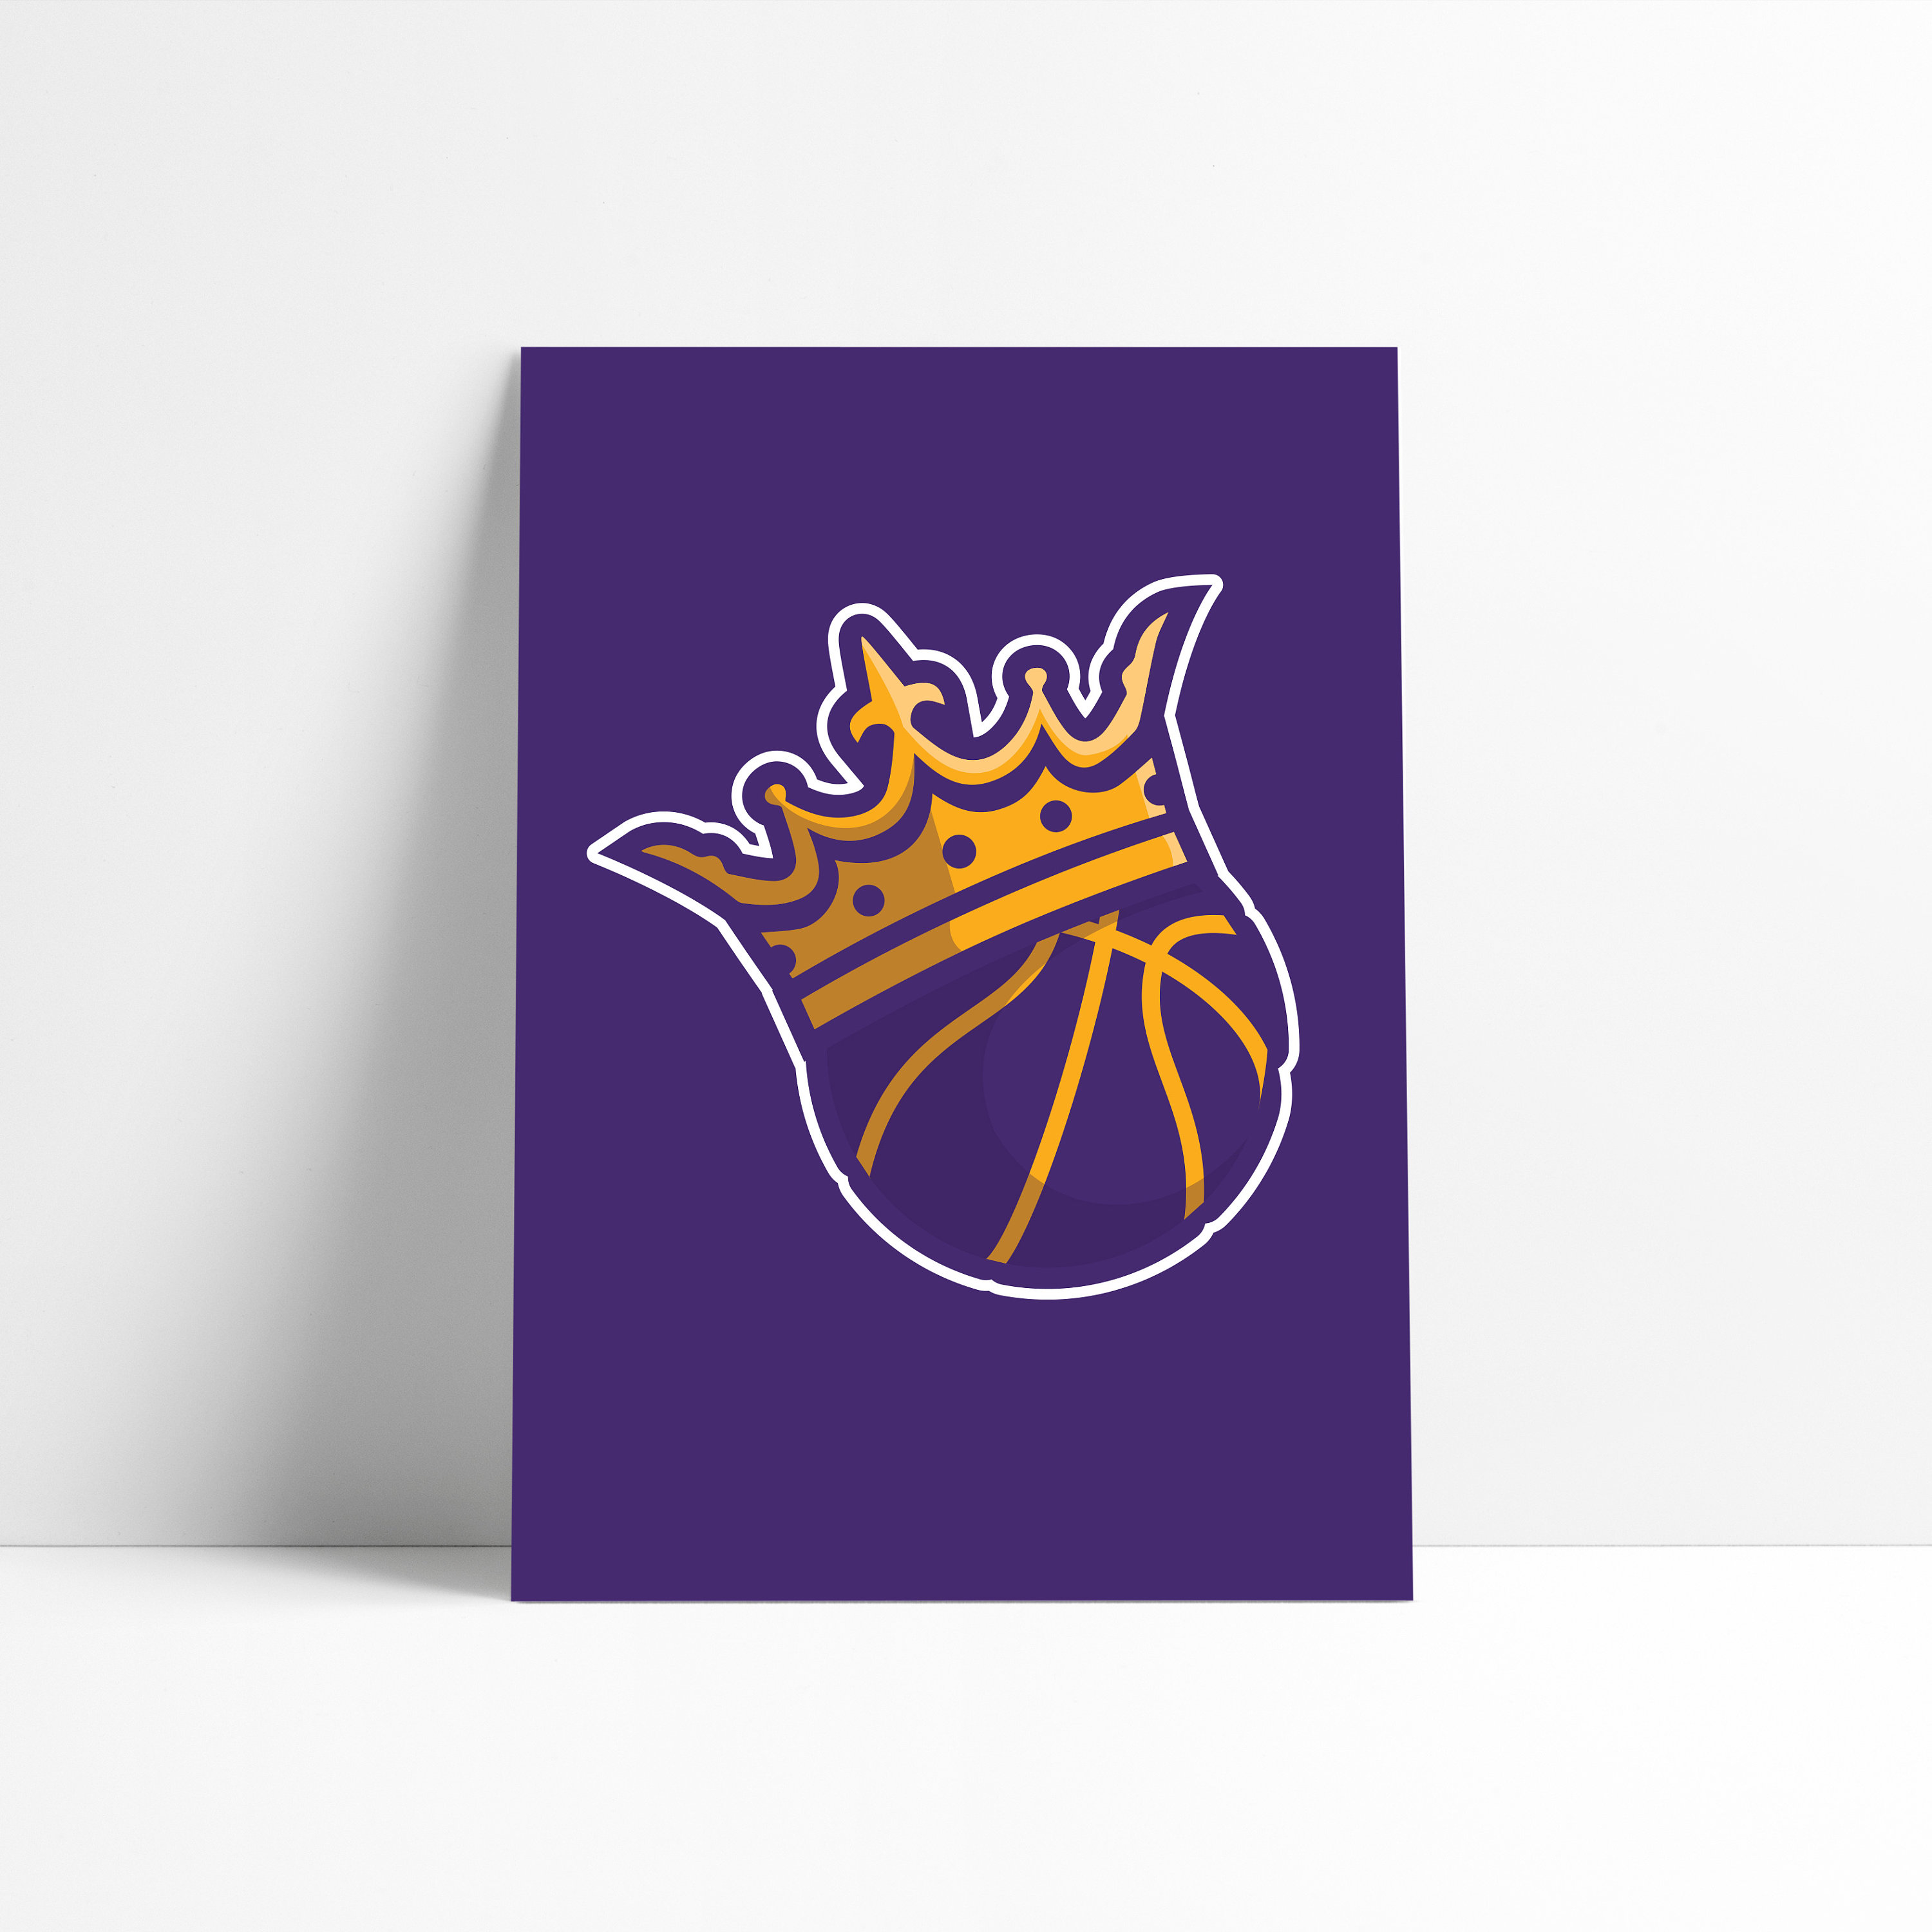 Download Lebron Nba Purple Lakers Jersey Wallpaper